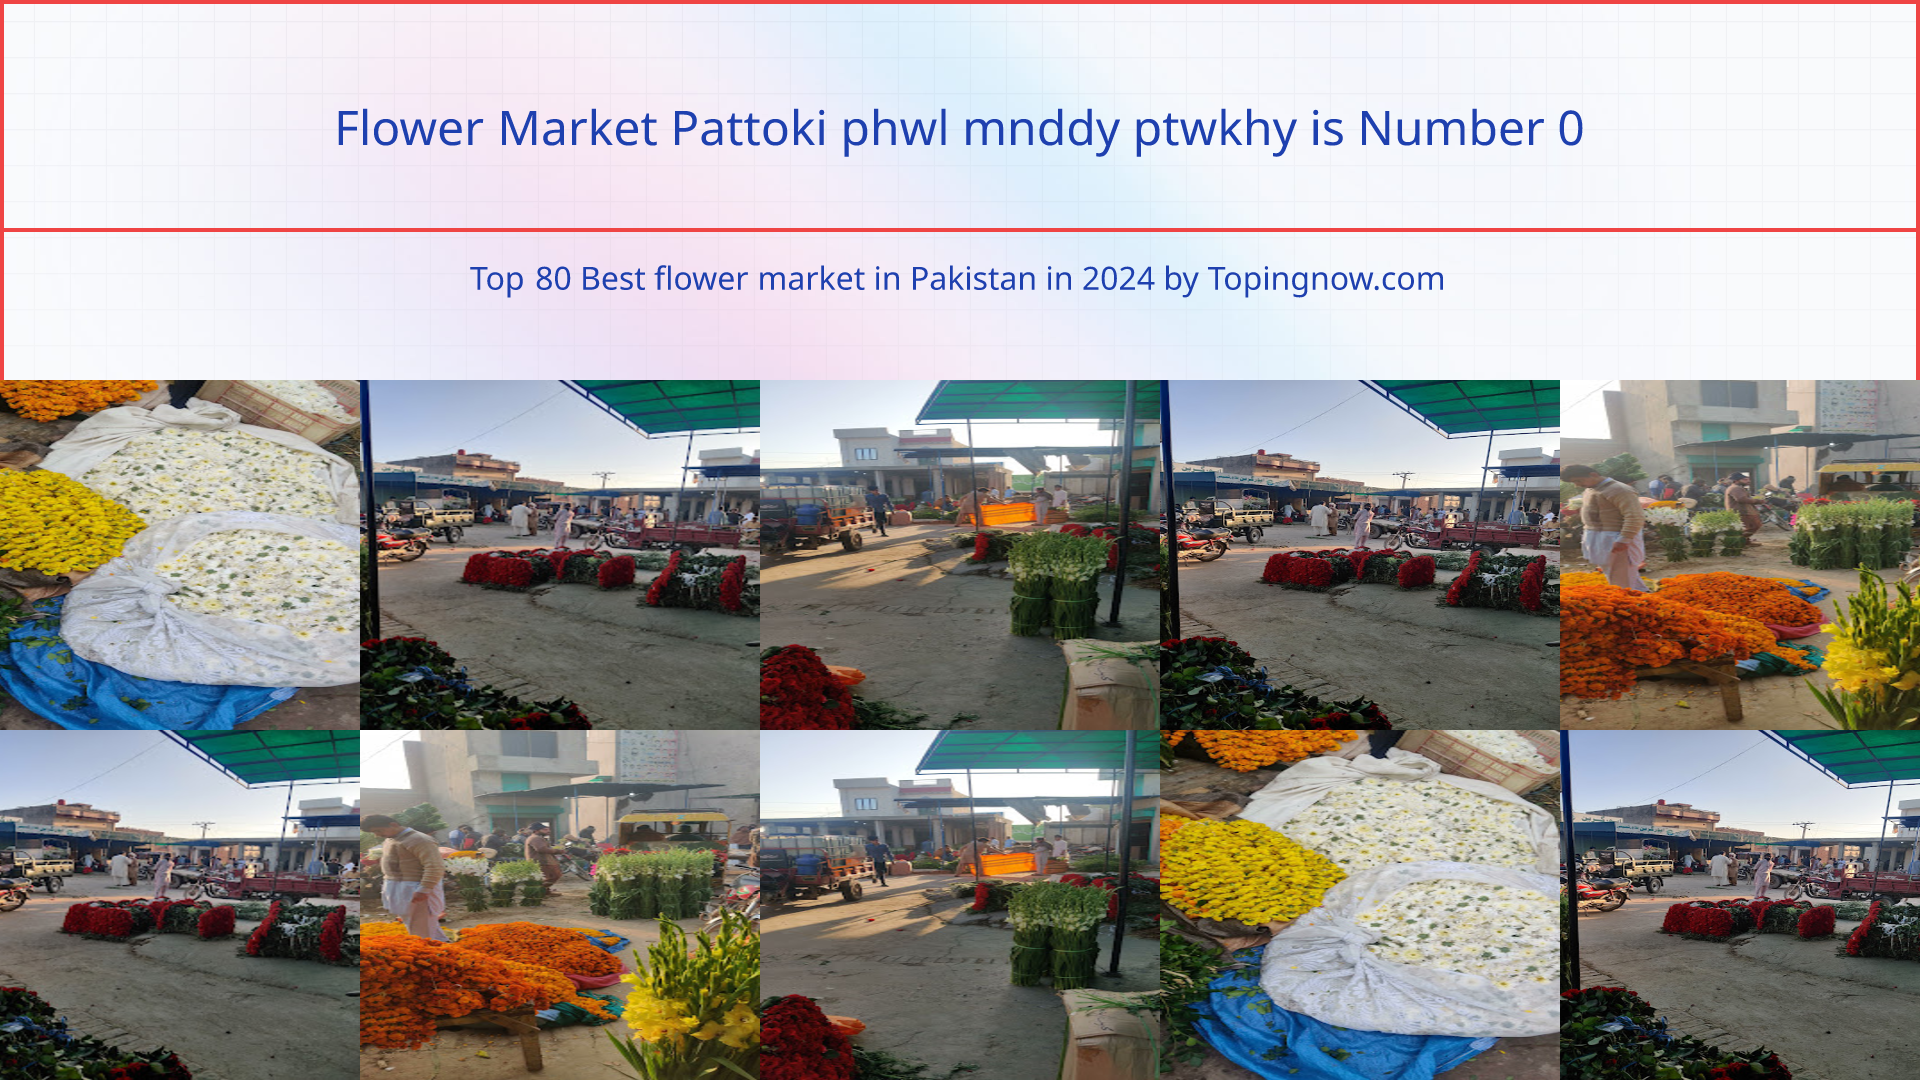 Flower Market Pattoki phwl mnddy ptwkhy: Top 80 Best flower market in Pakistan in 2024